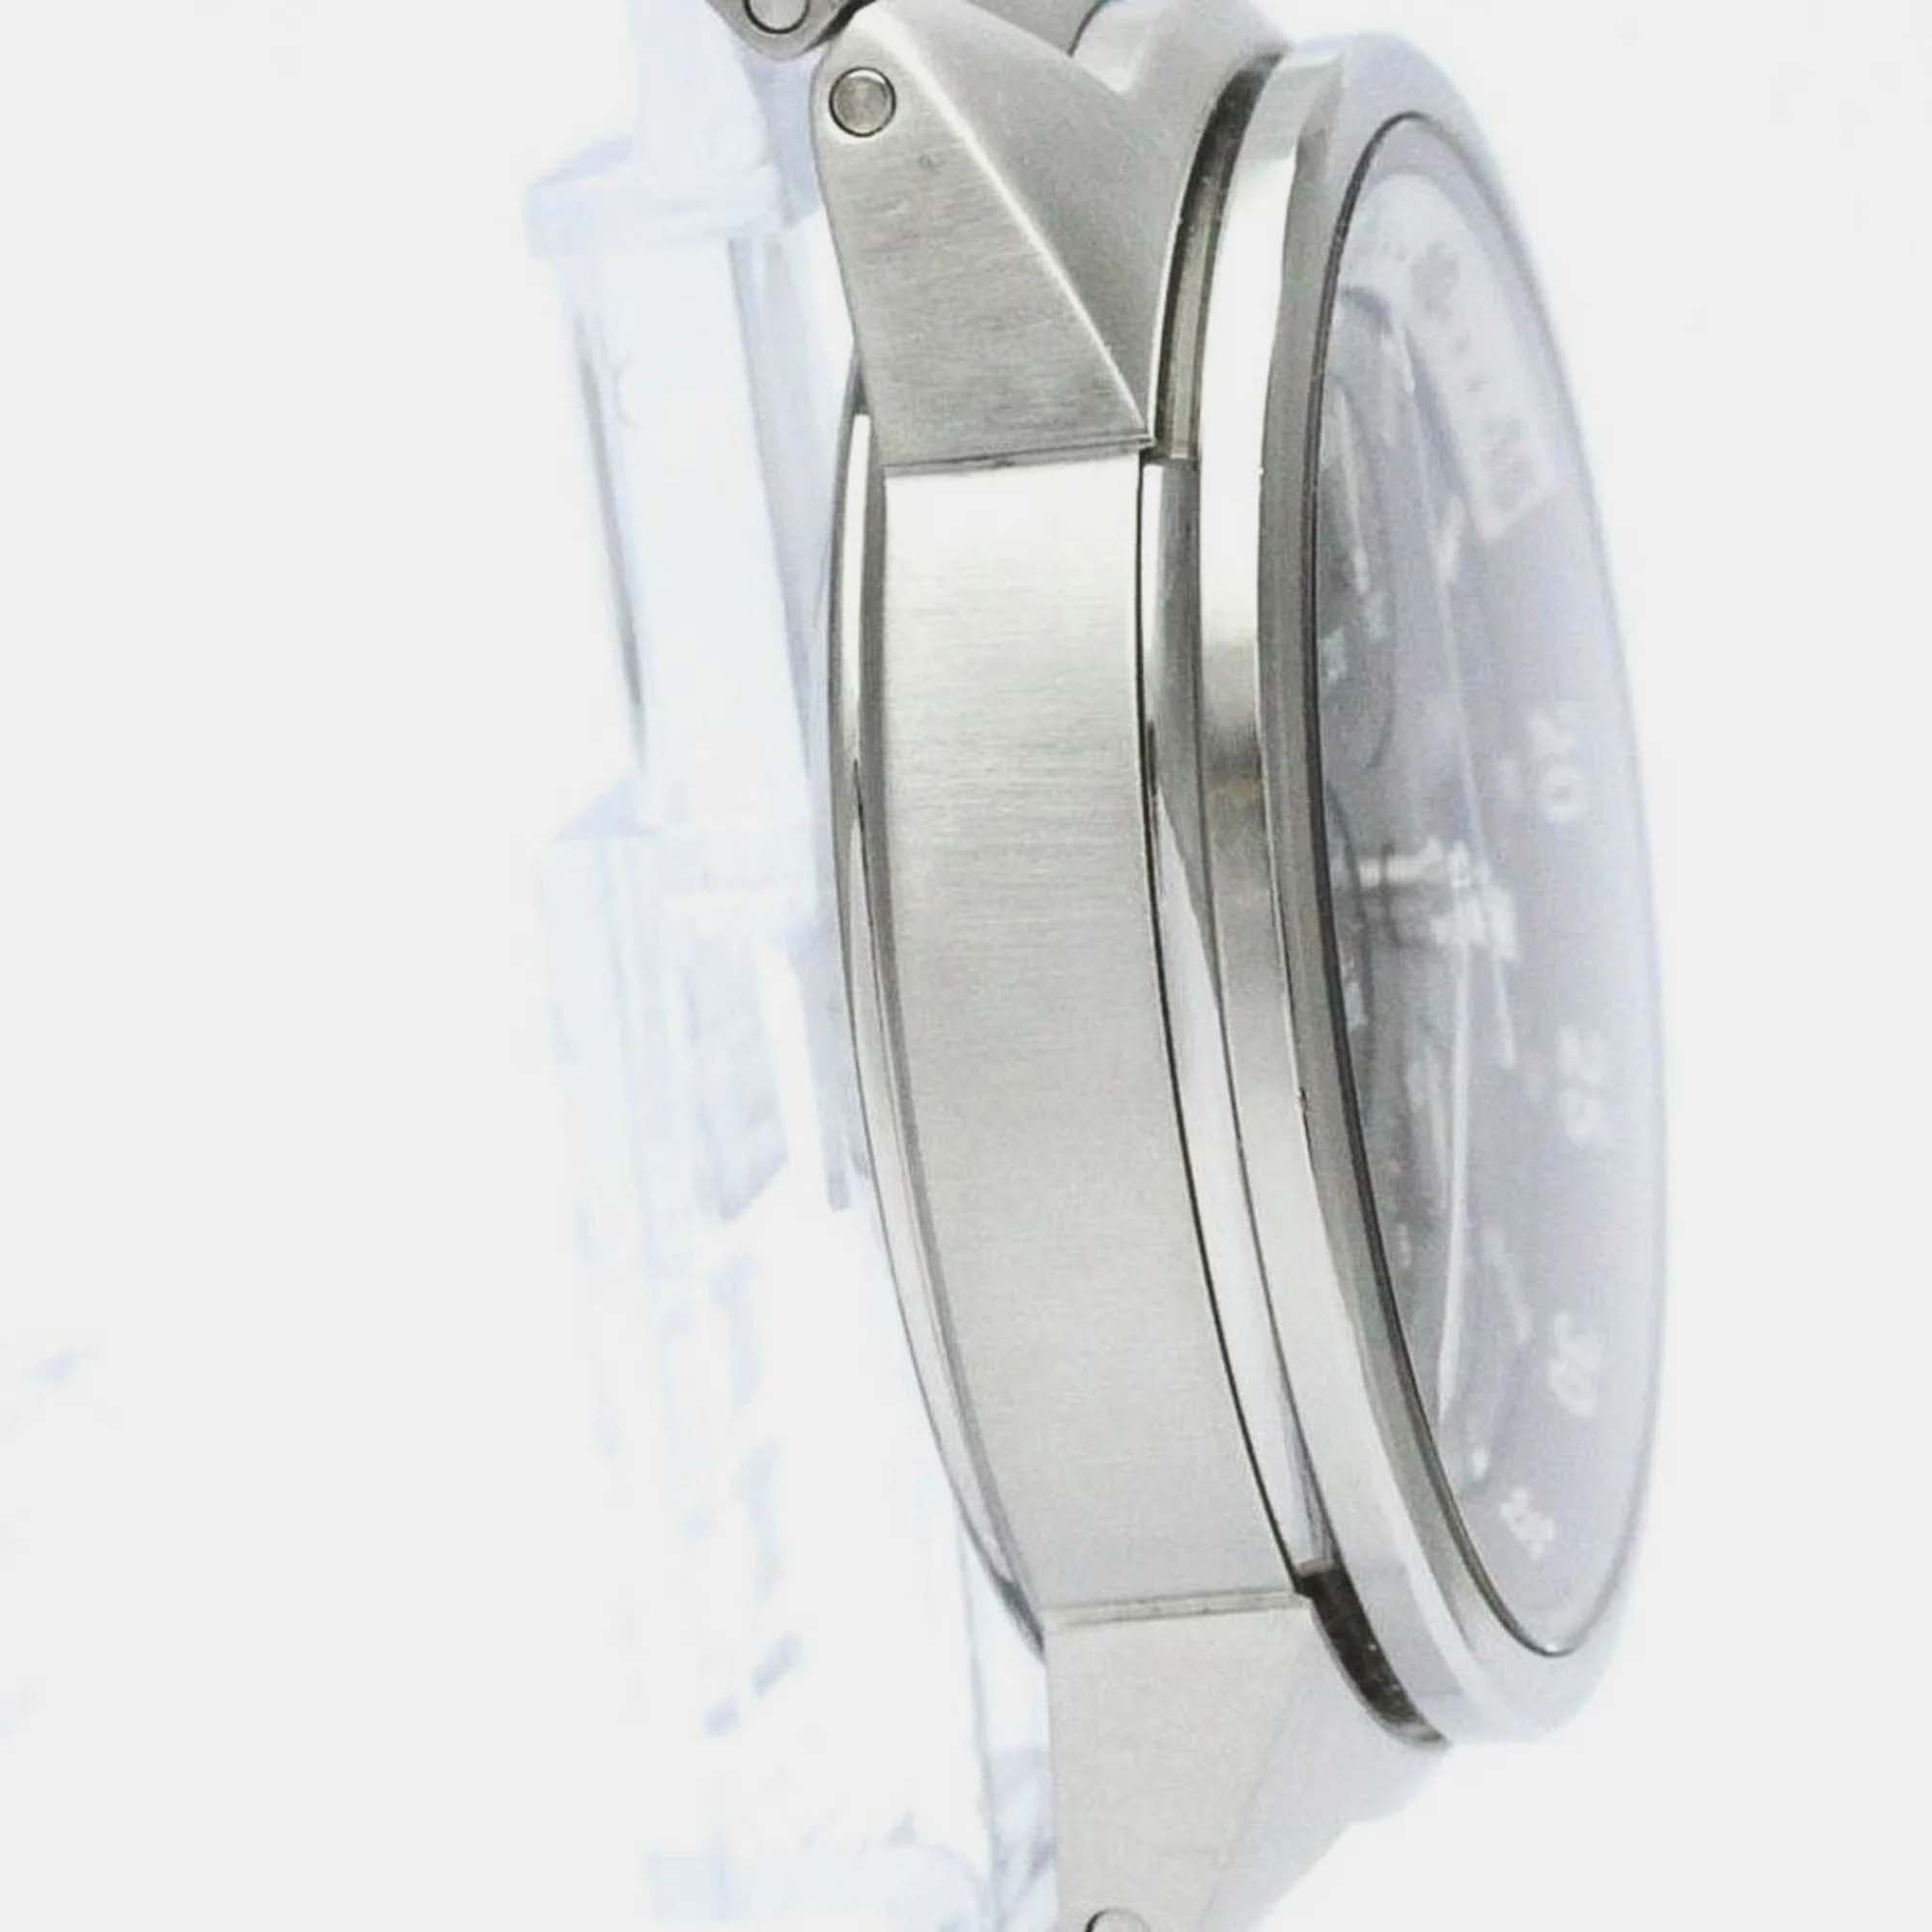 IWC Black Stainless Steel Aquatimer IW371928 Automatic Men's Wristwatch 42 Mm